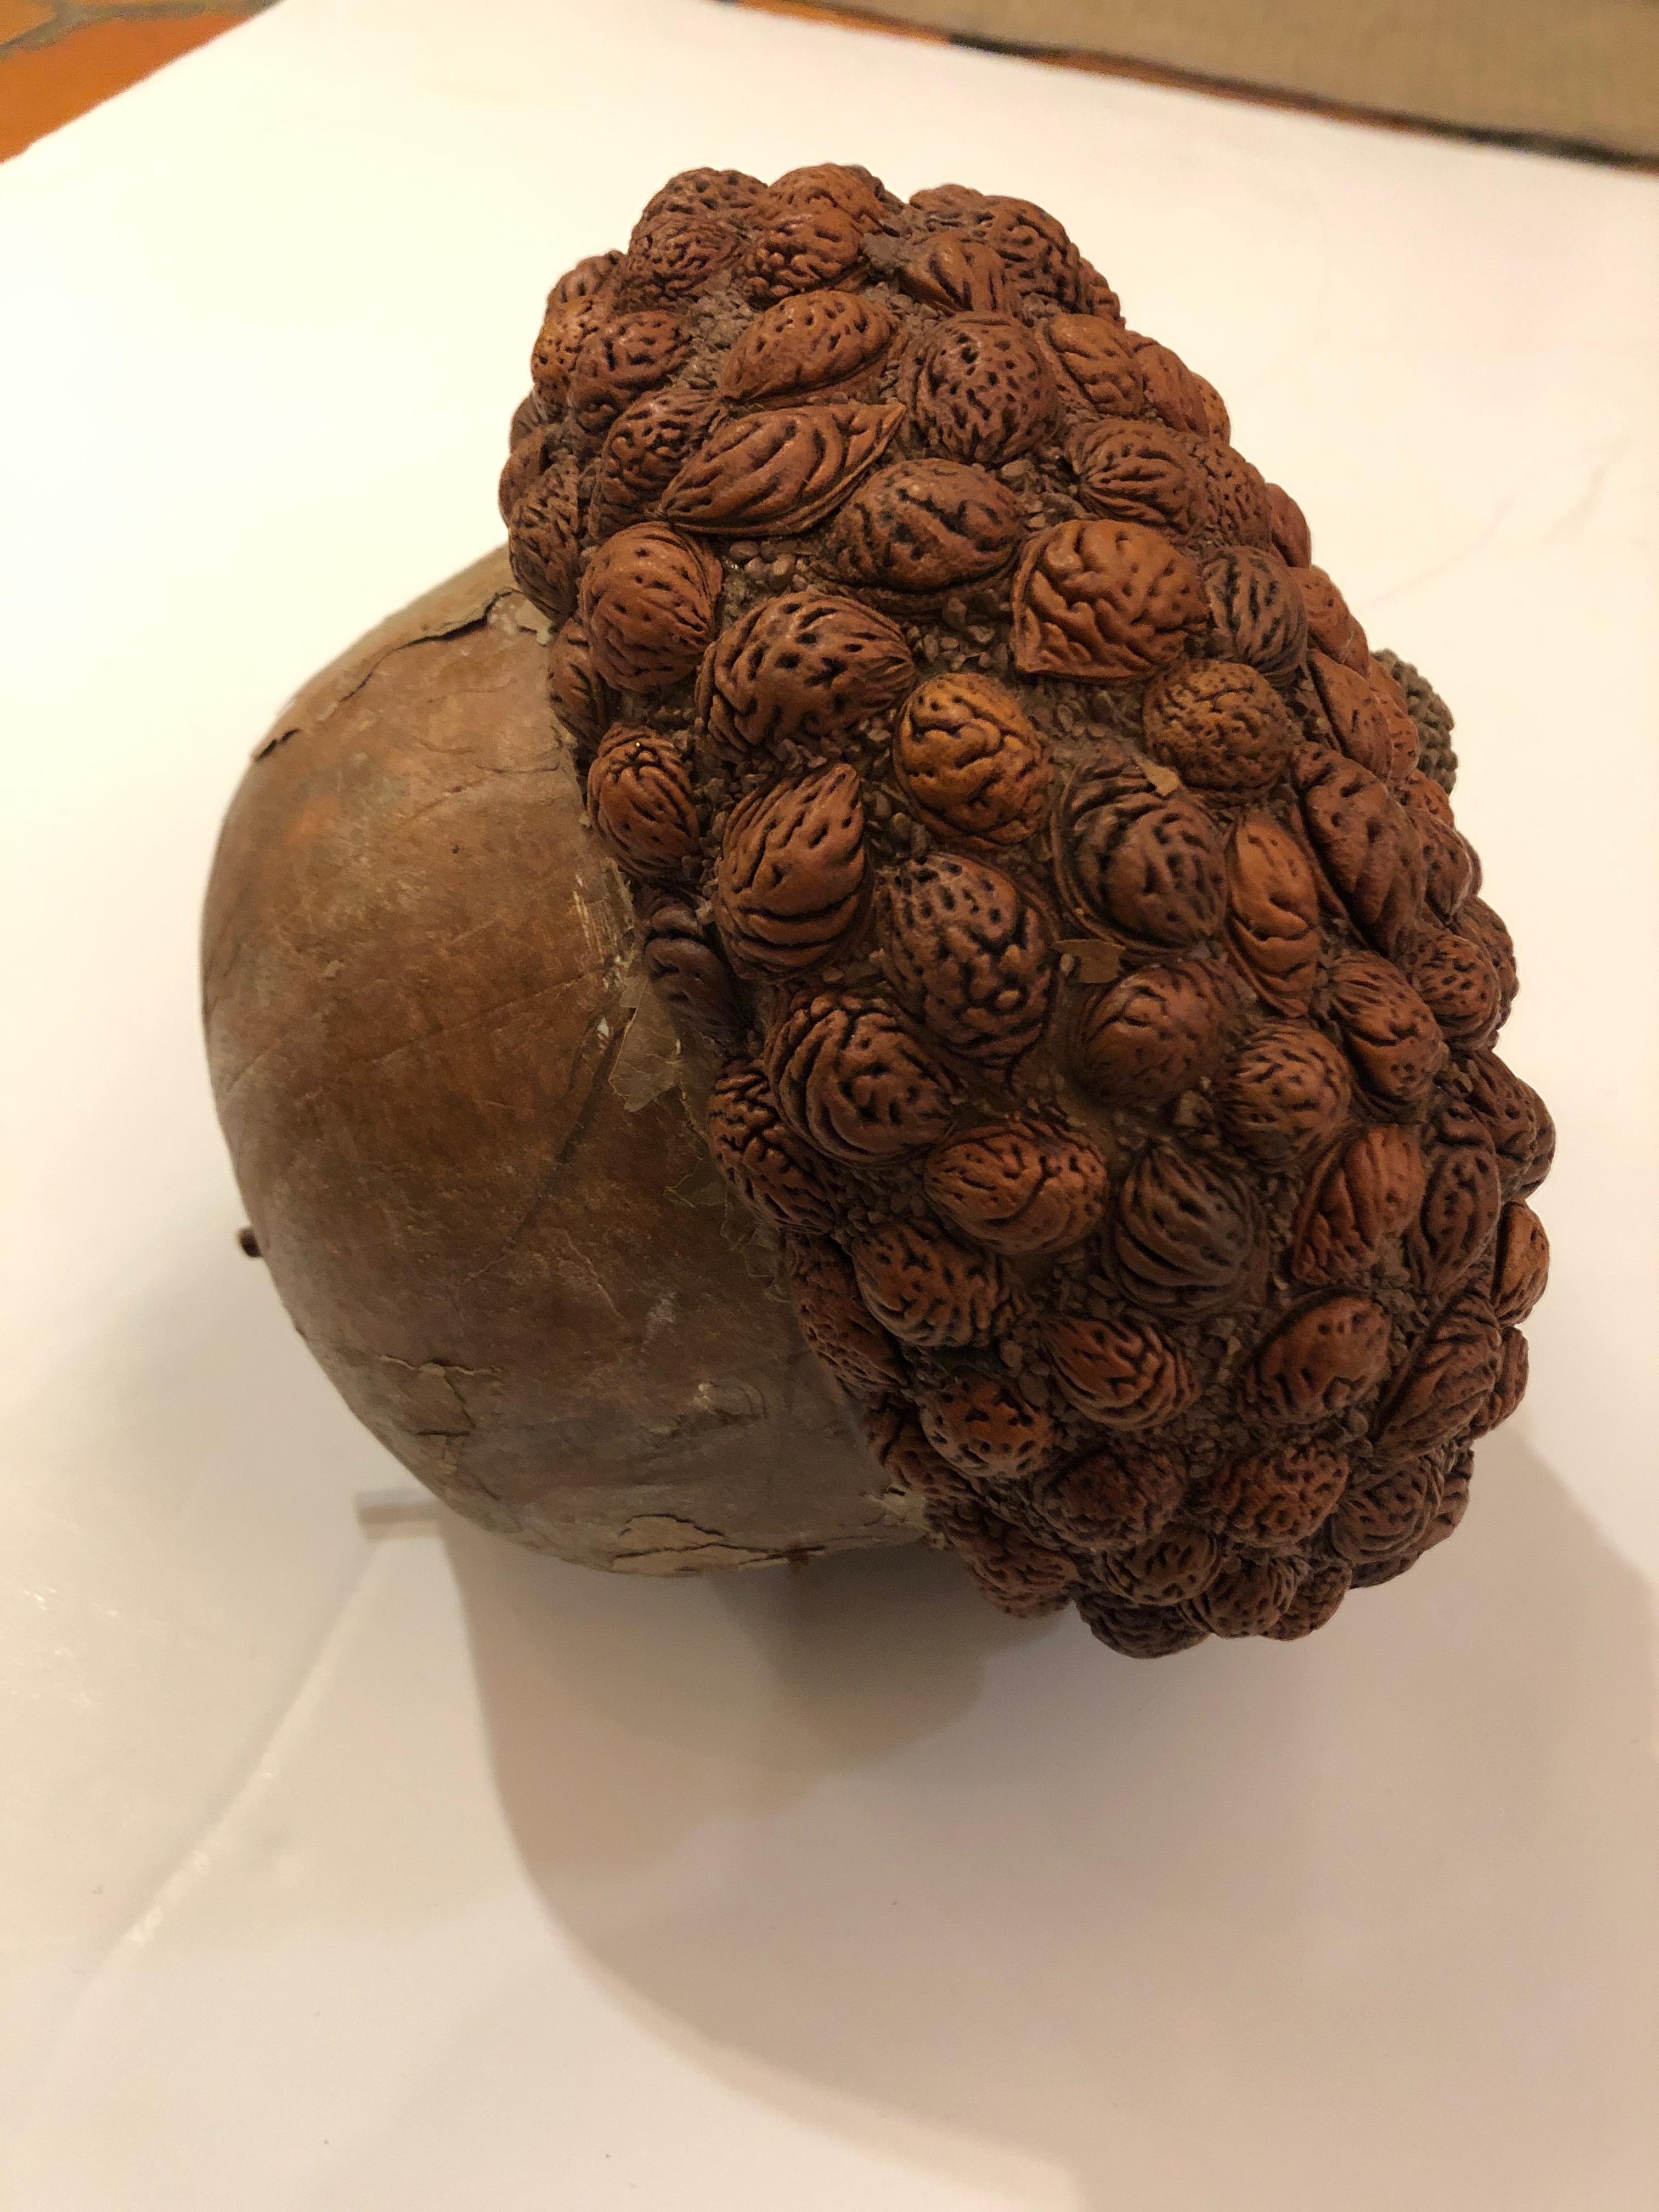 Mid-20th Century Organic Handmade Acorn Sculpture from Organic Material